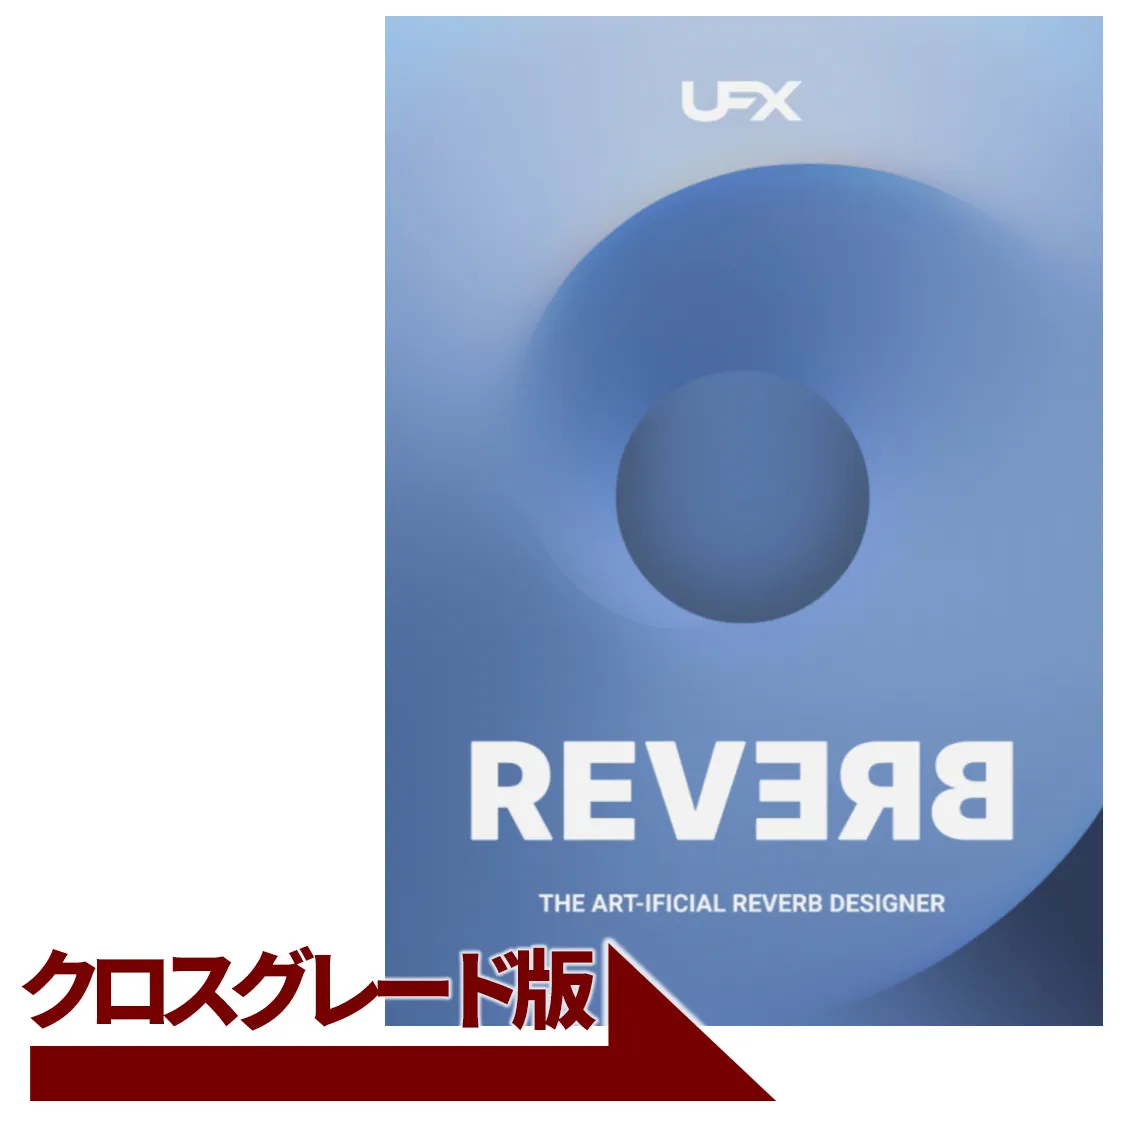 UFX REVERB クロスグレード